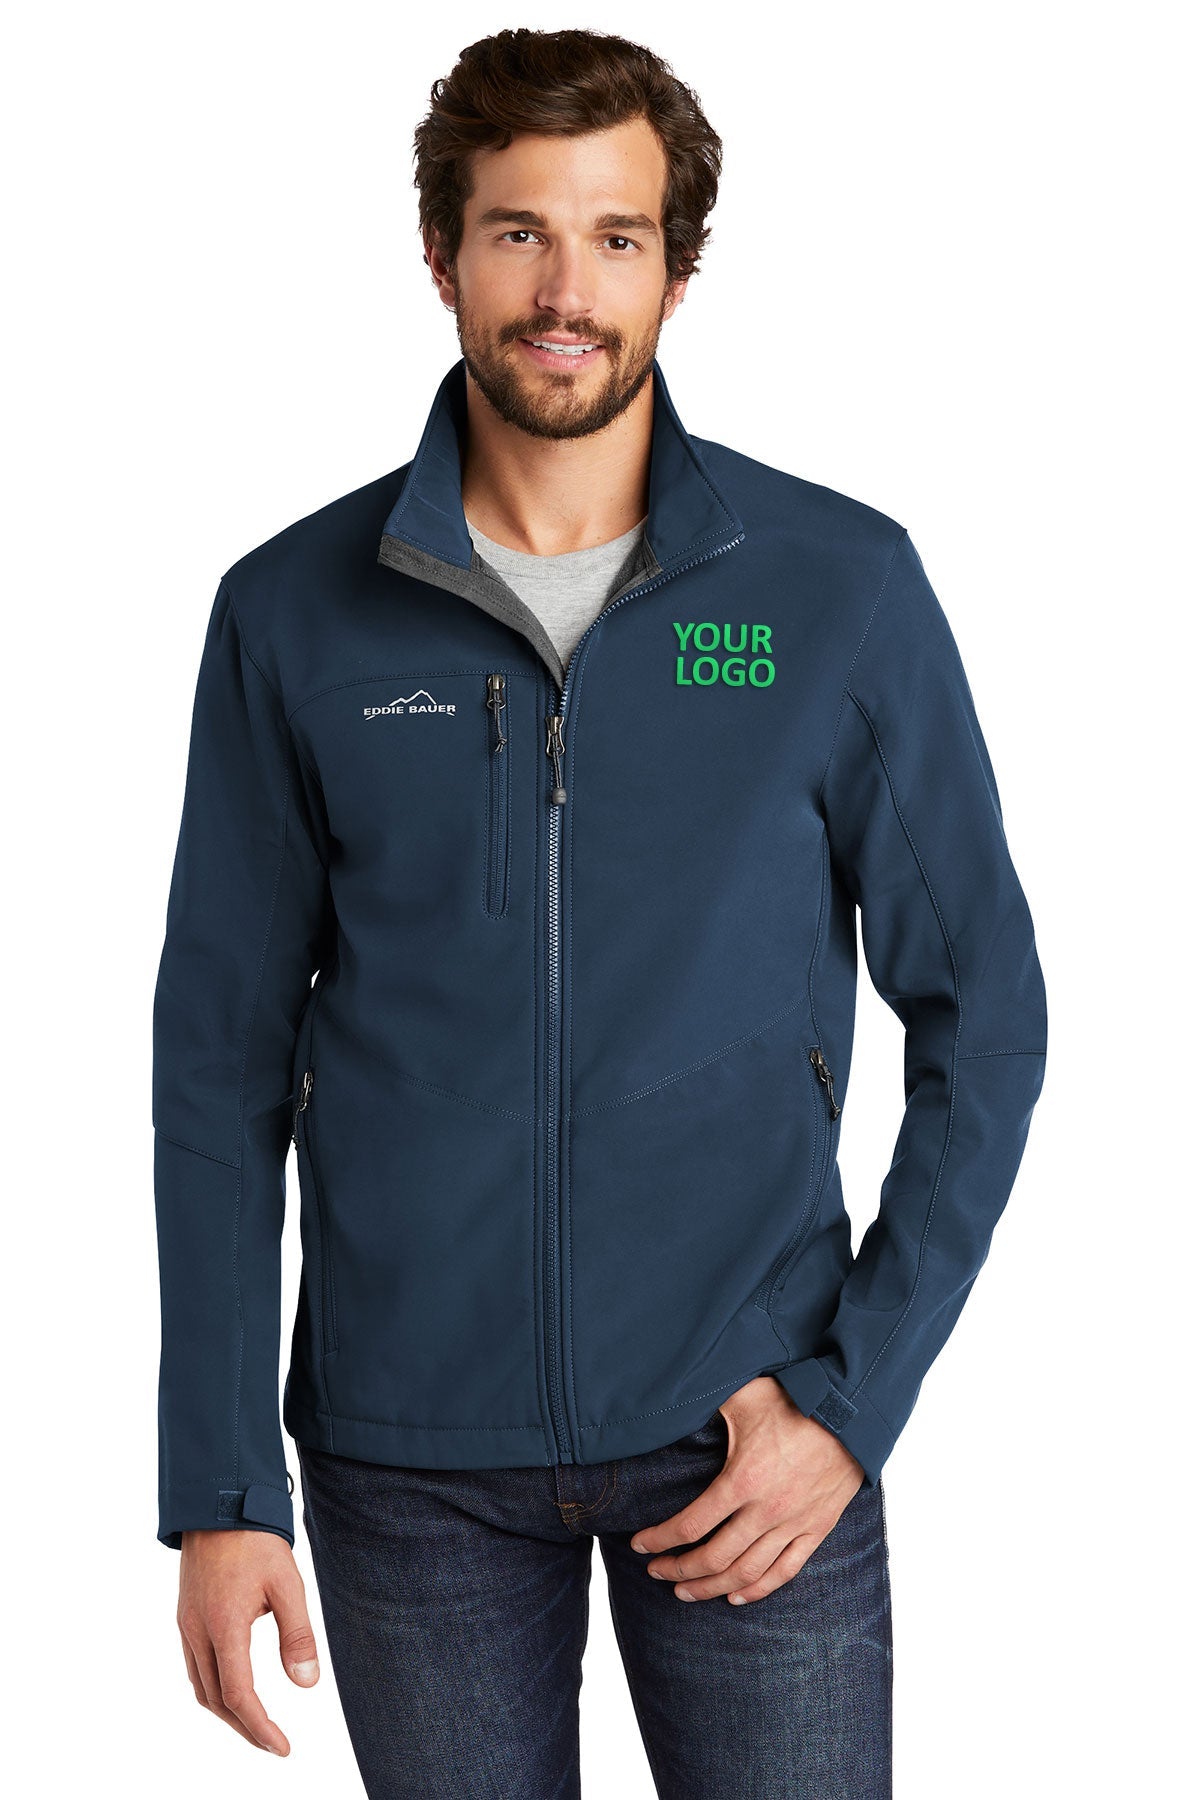 Eddie Bauer River Blue EB530 company jackets with logo